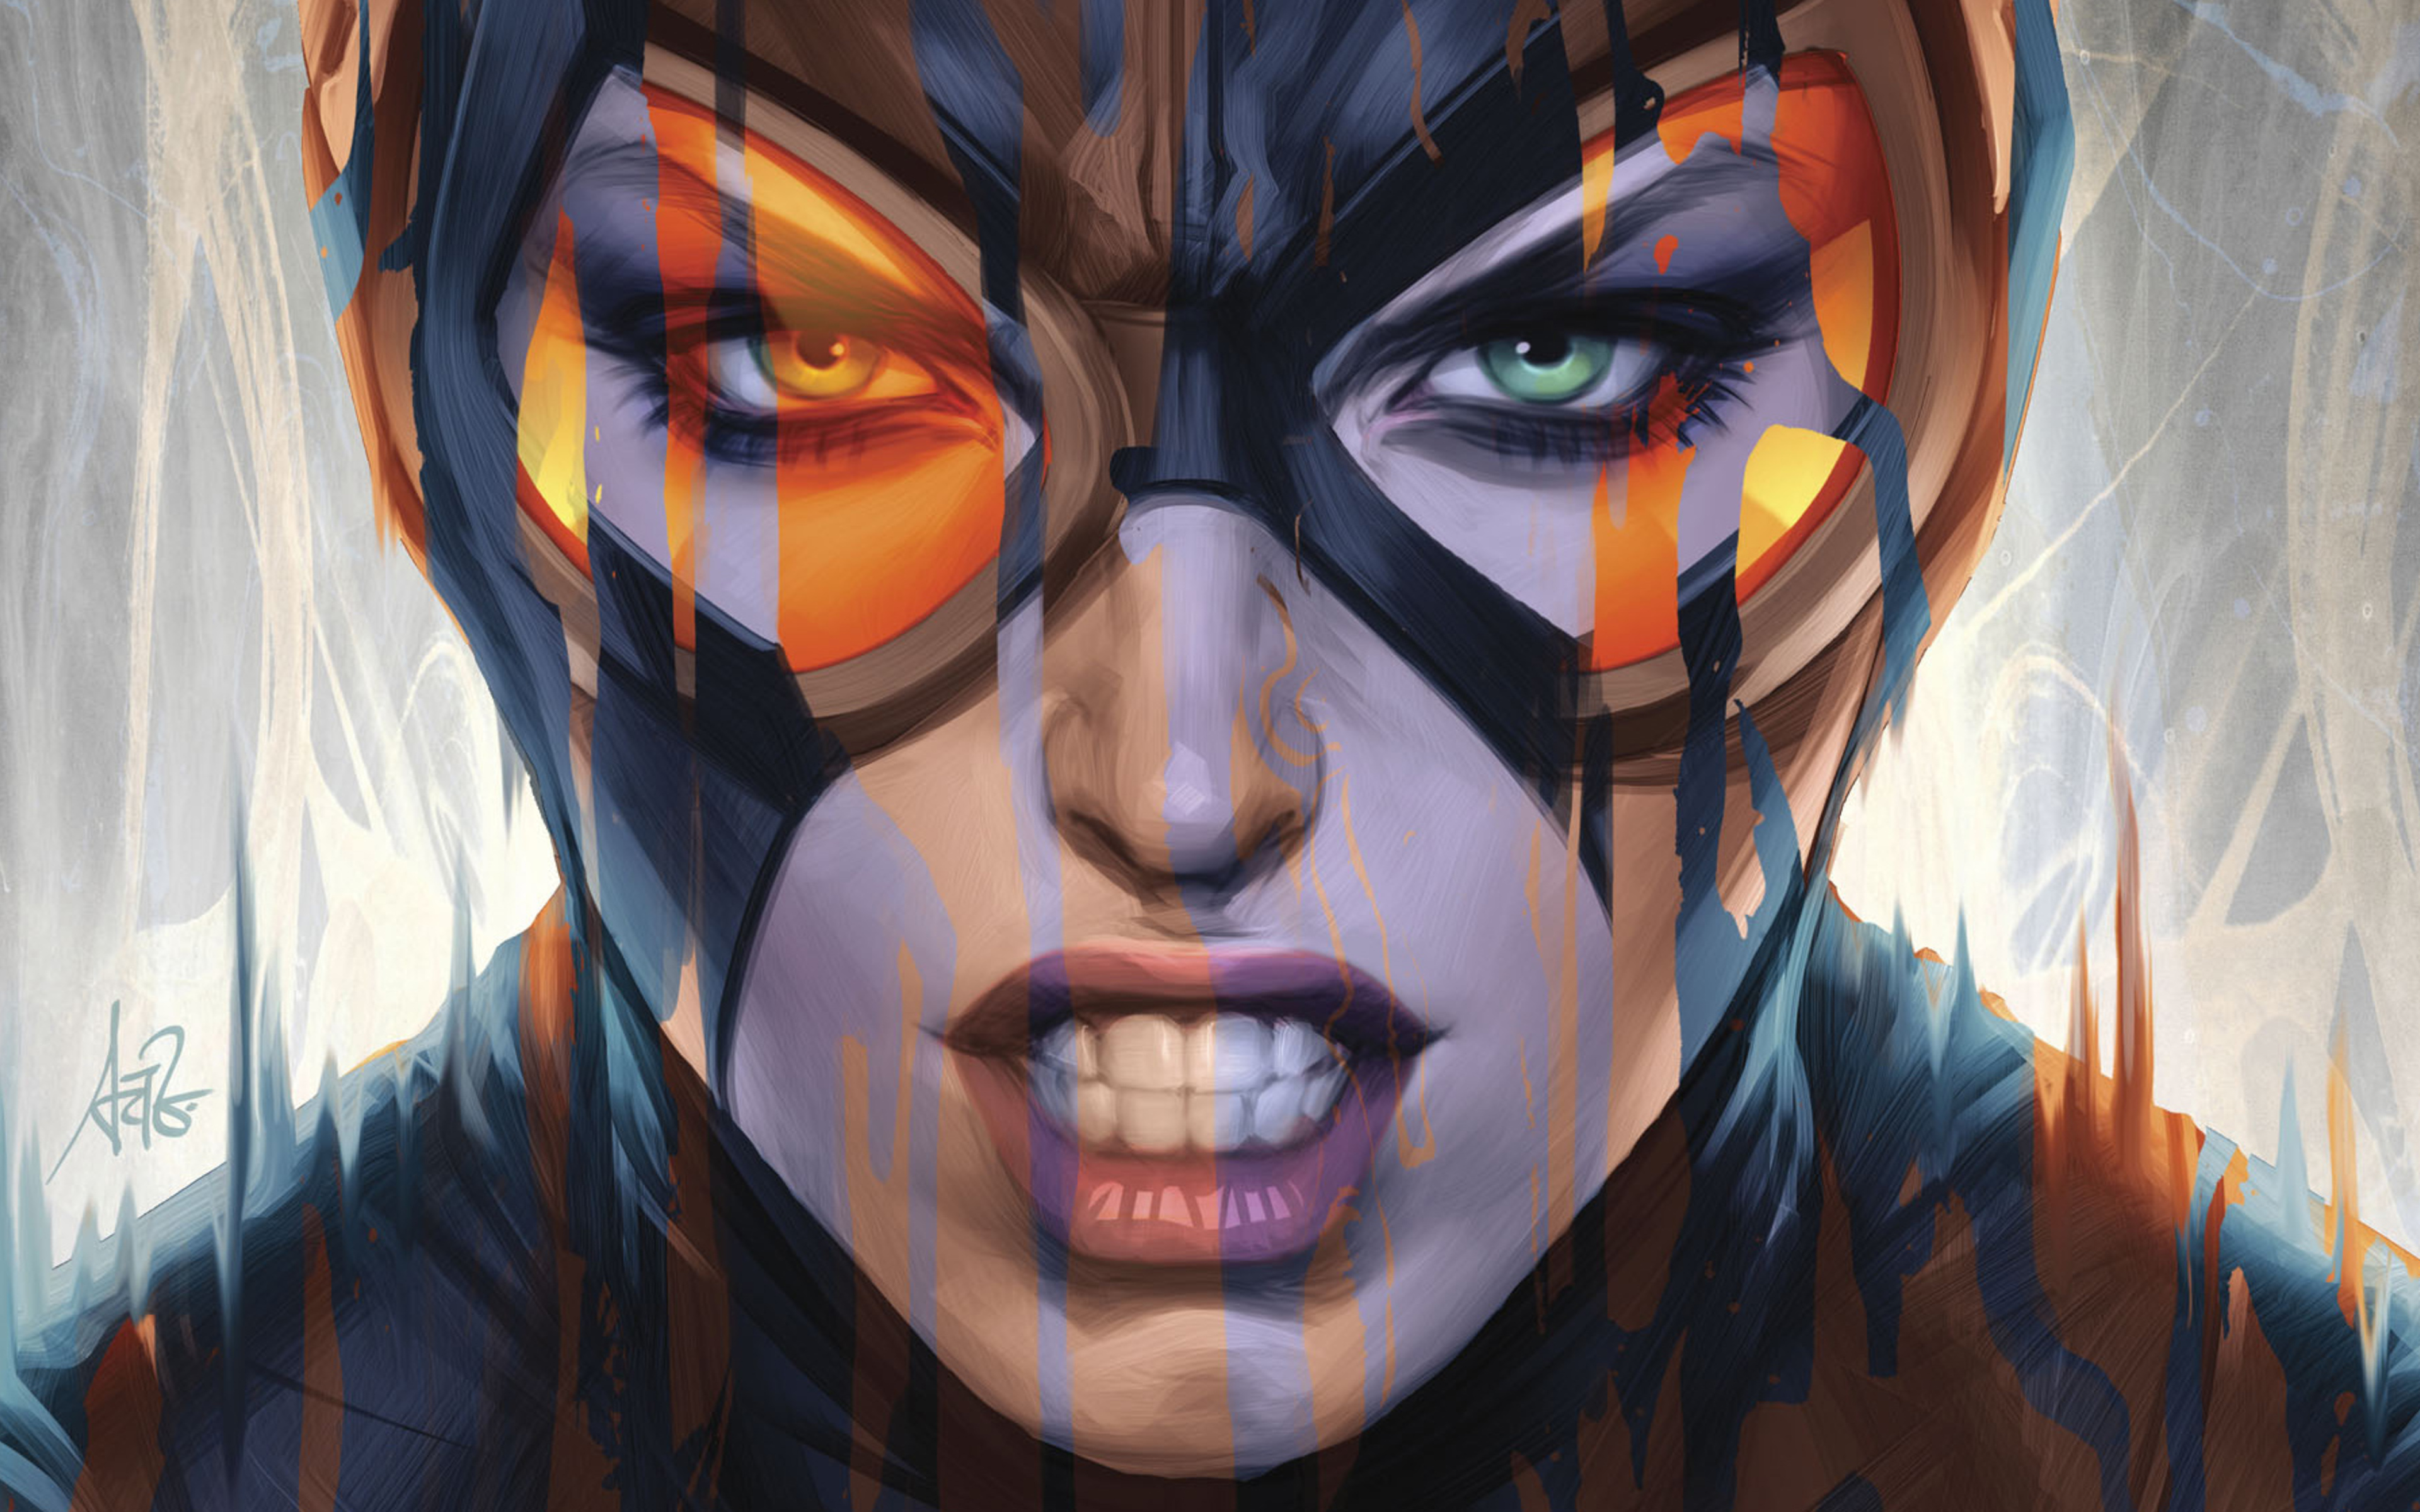 General 3840x2400 Catwoman mask DC Comics teeth villains looking at viewer signature closeup face eyes lips minimalism Artgerm digital art watermarked people